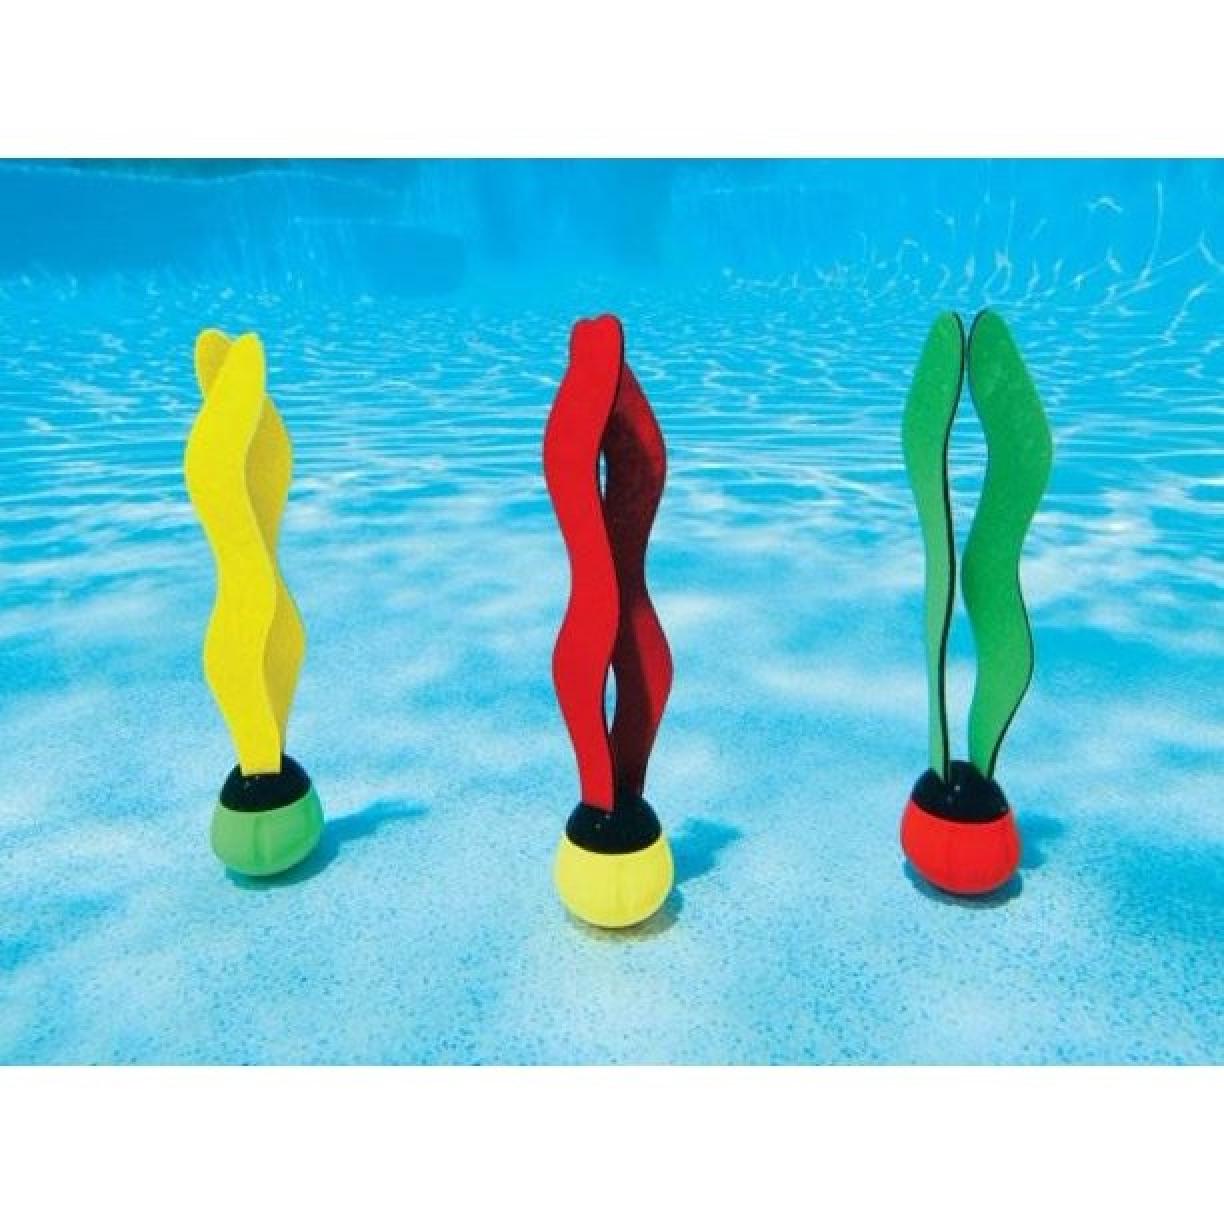 Intex Underwater Pool Toys - Fun Balls